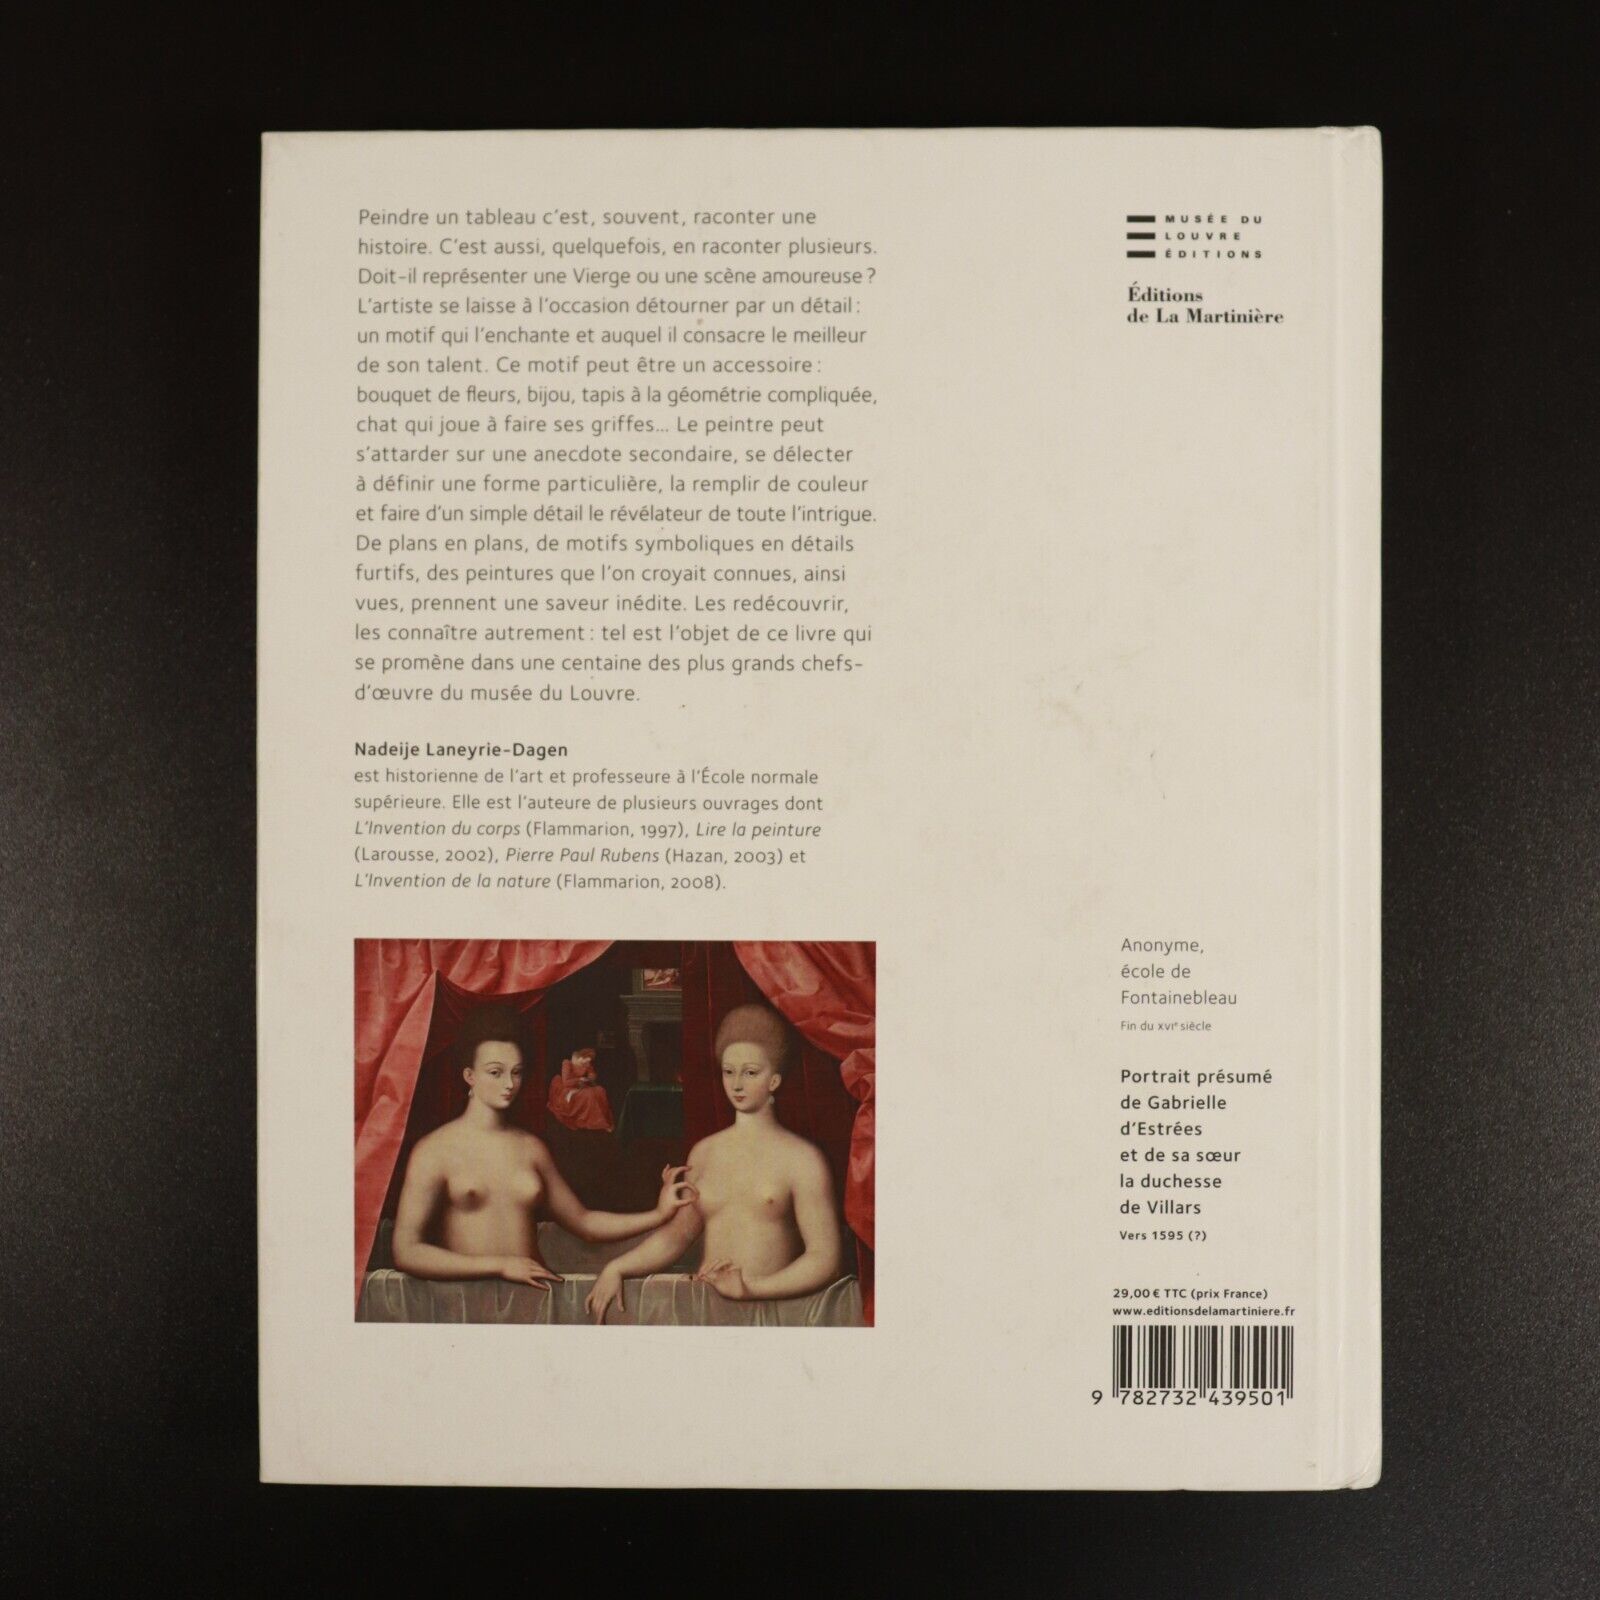 2009 Details Editions De La Martiniere Nadeije Laneyrie-Dagen French Art Book - 0